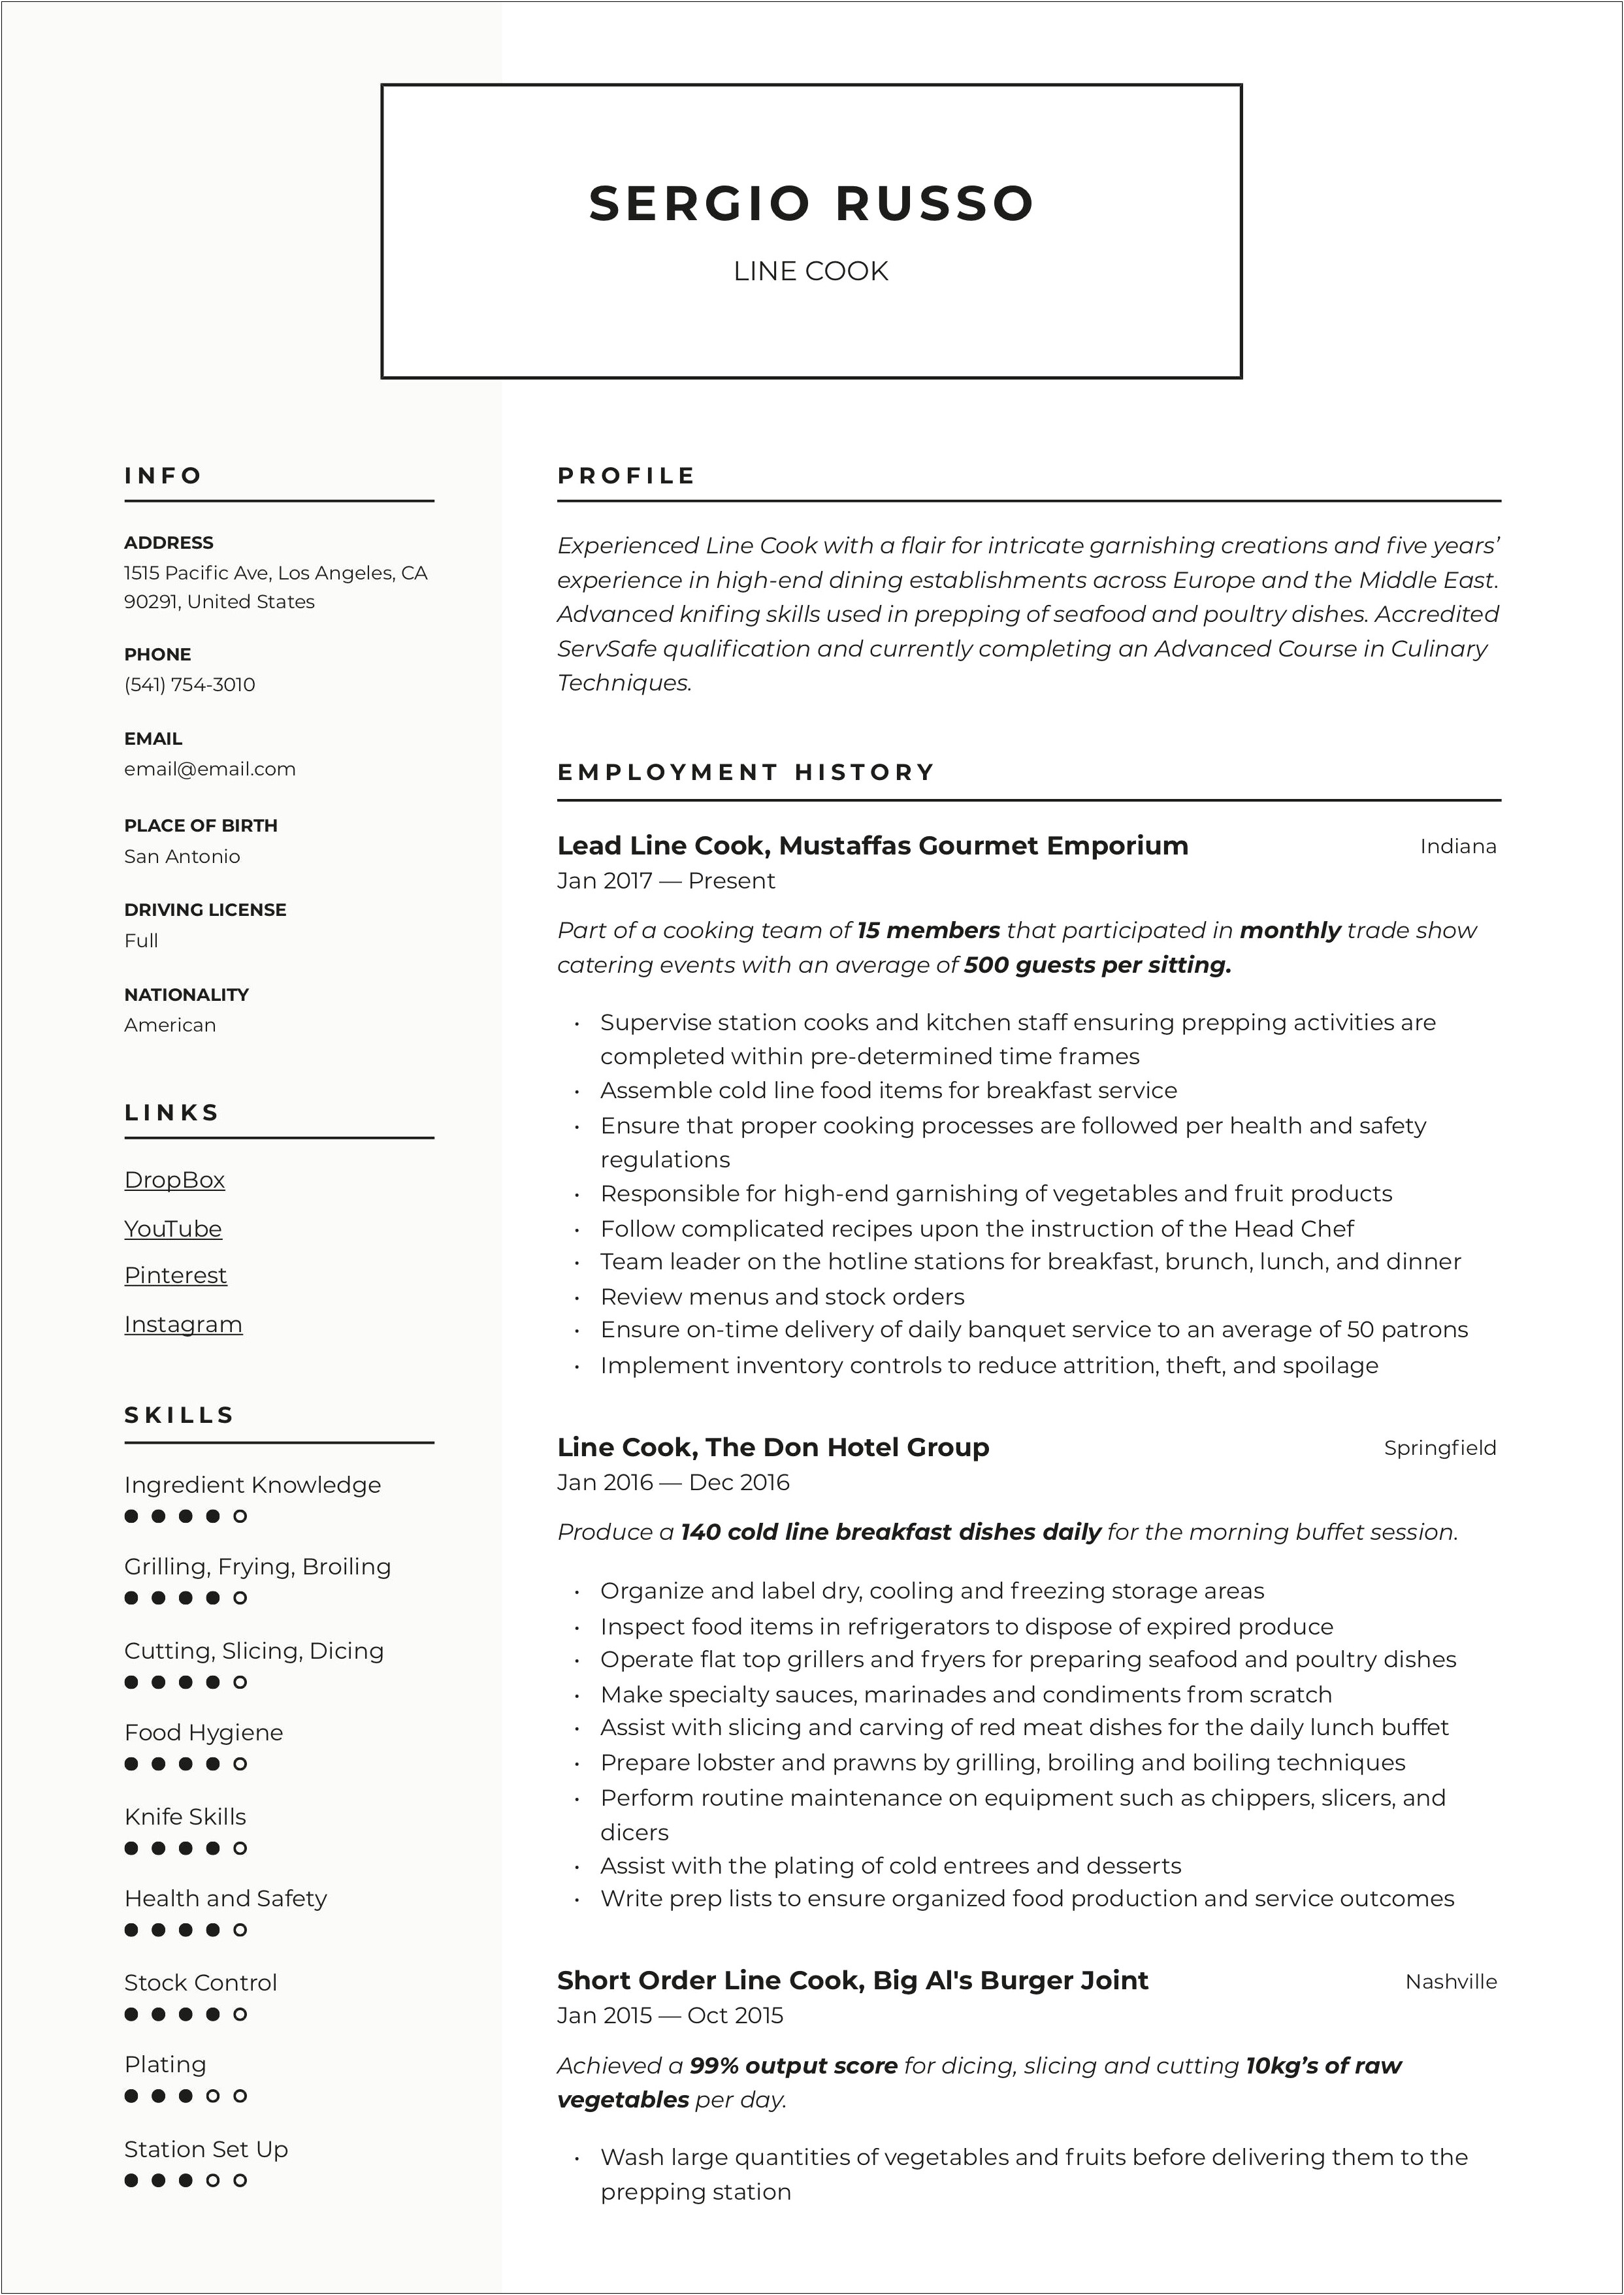 Resume Job Description For Line Cook